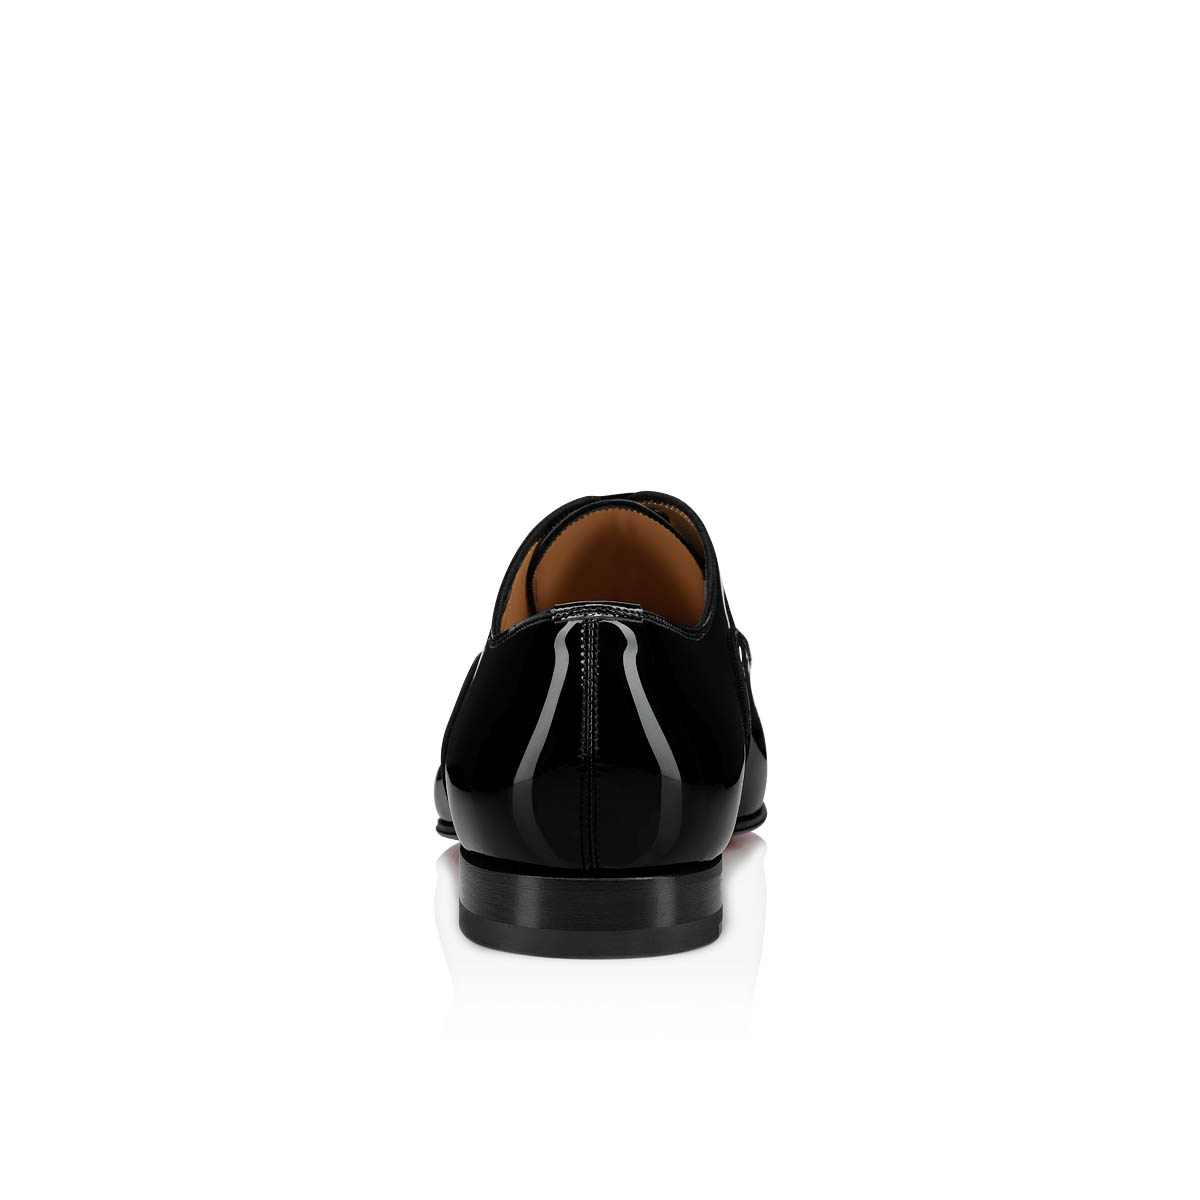 CHRISTIAN LOUBOUTIN Greggo Men's Lace-Up Leather Patent Dress Shoes Size 40  (US 7D)